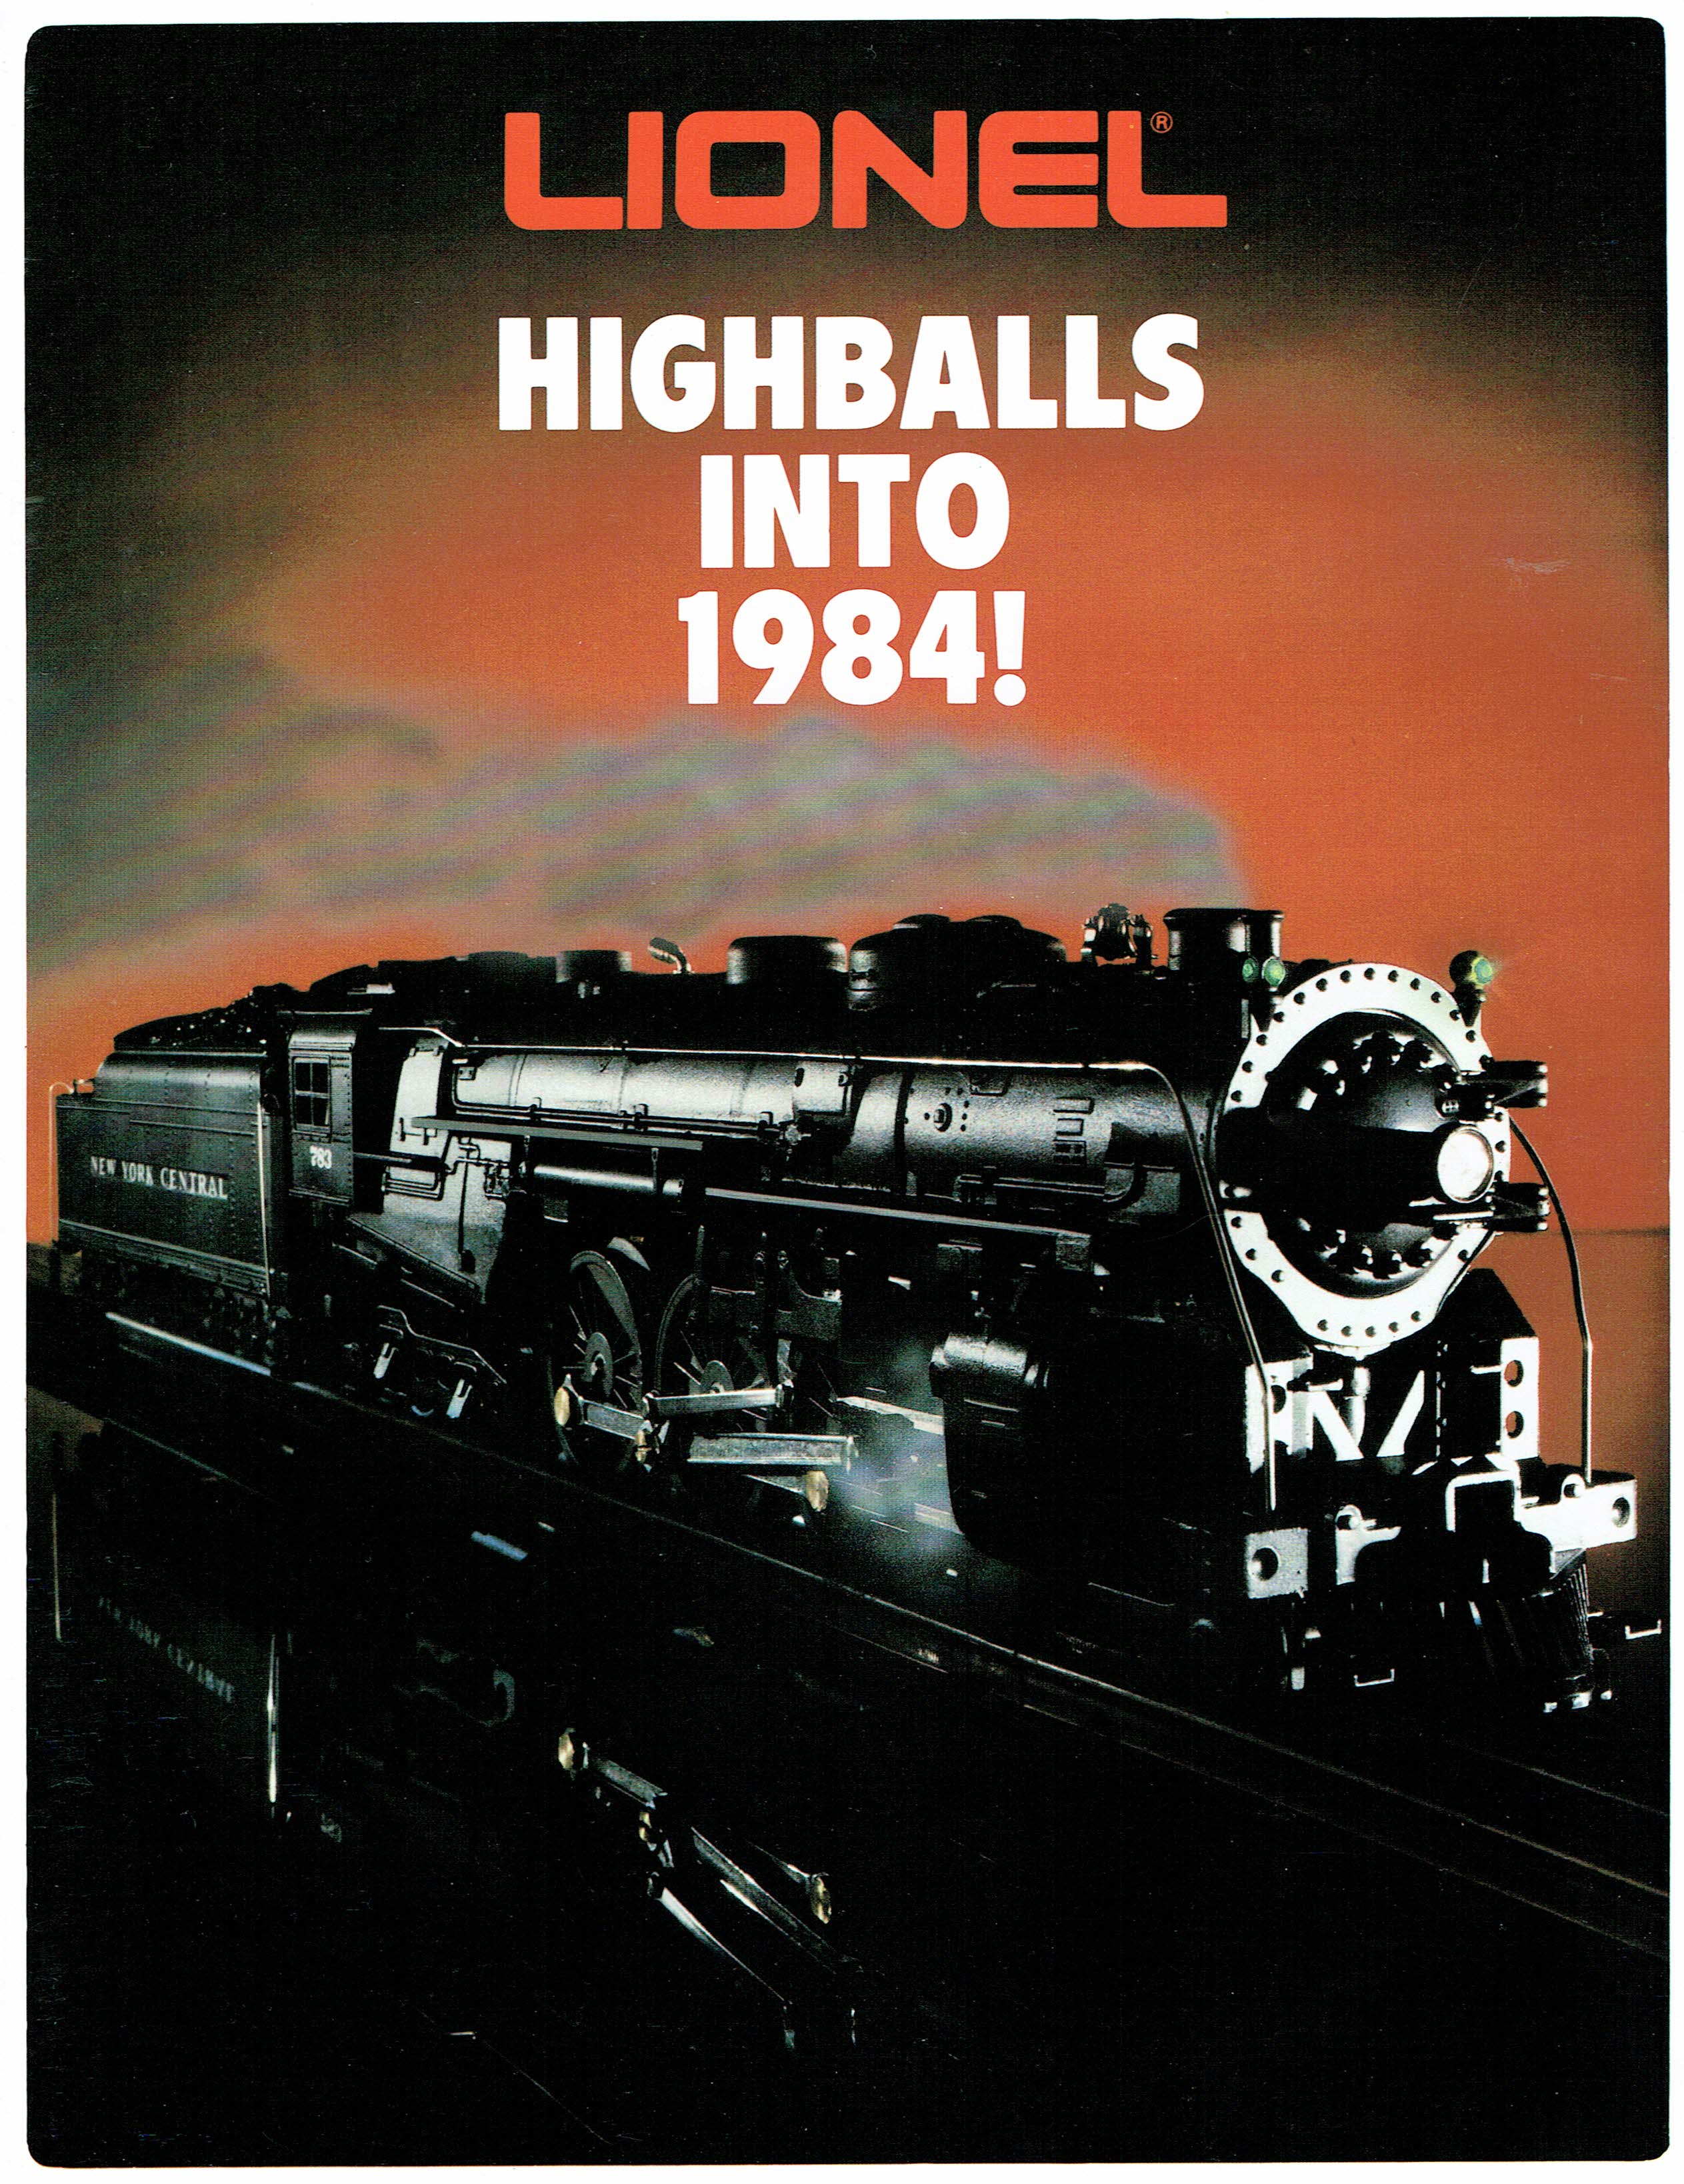 Lionel Highballs Into 1984! Flier image